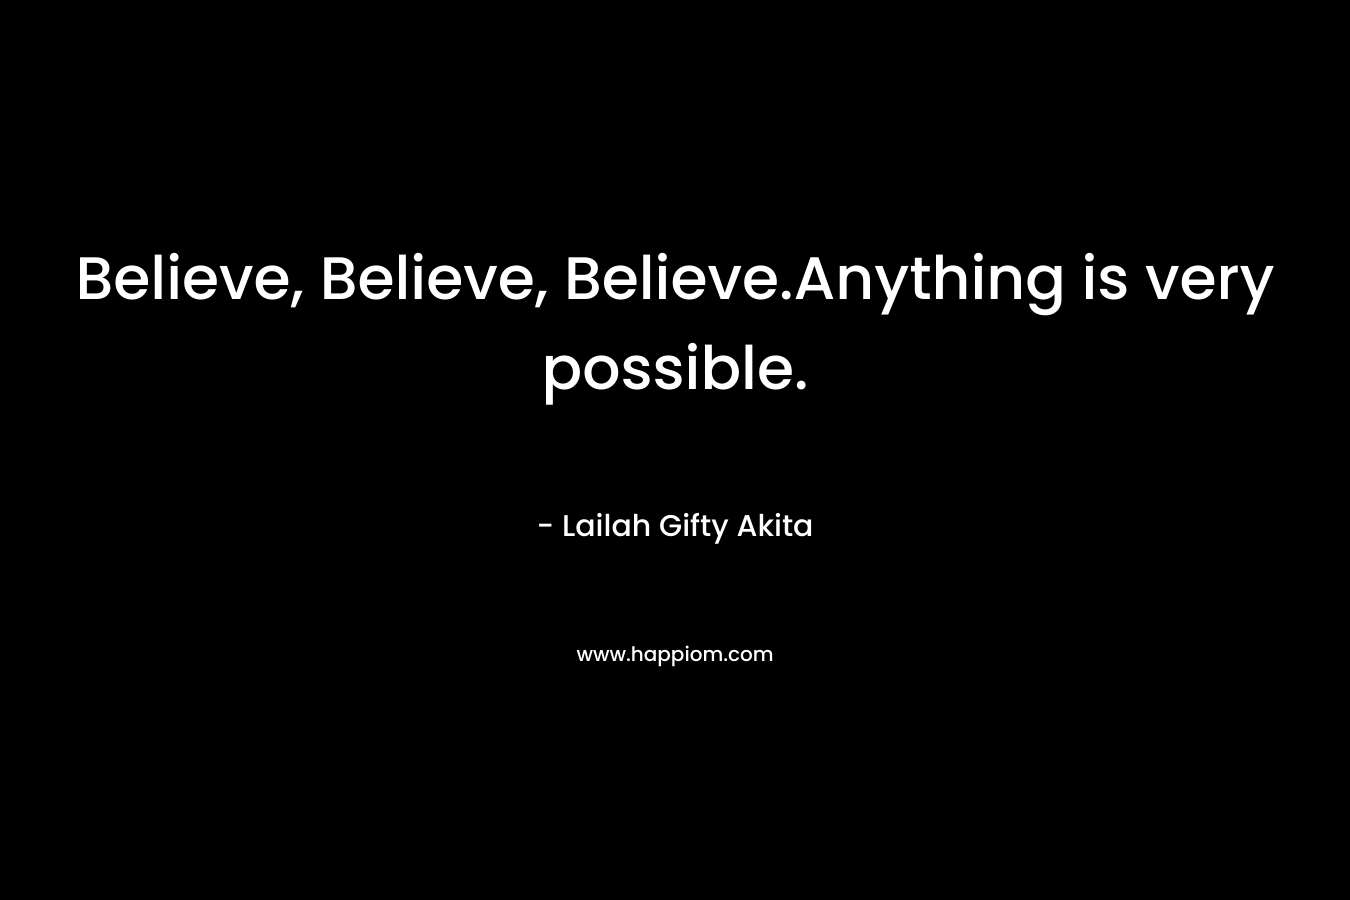 Believe, Believe, Believe.Anything is very possible.